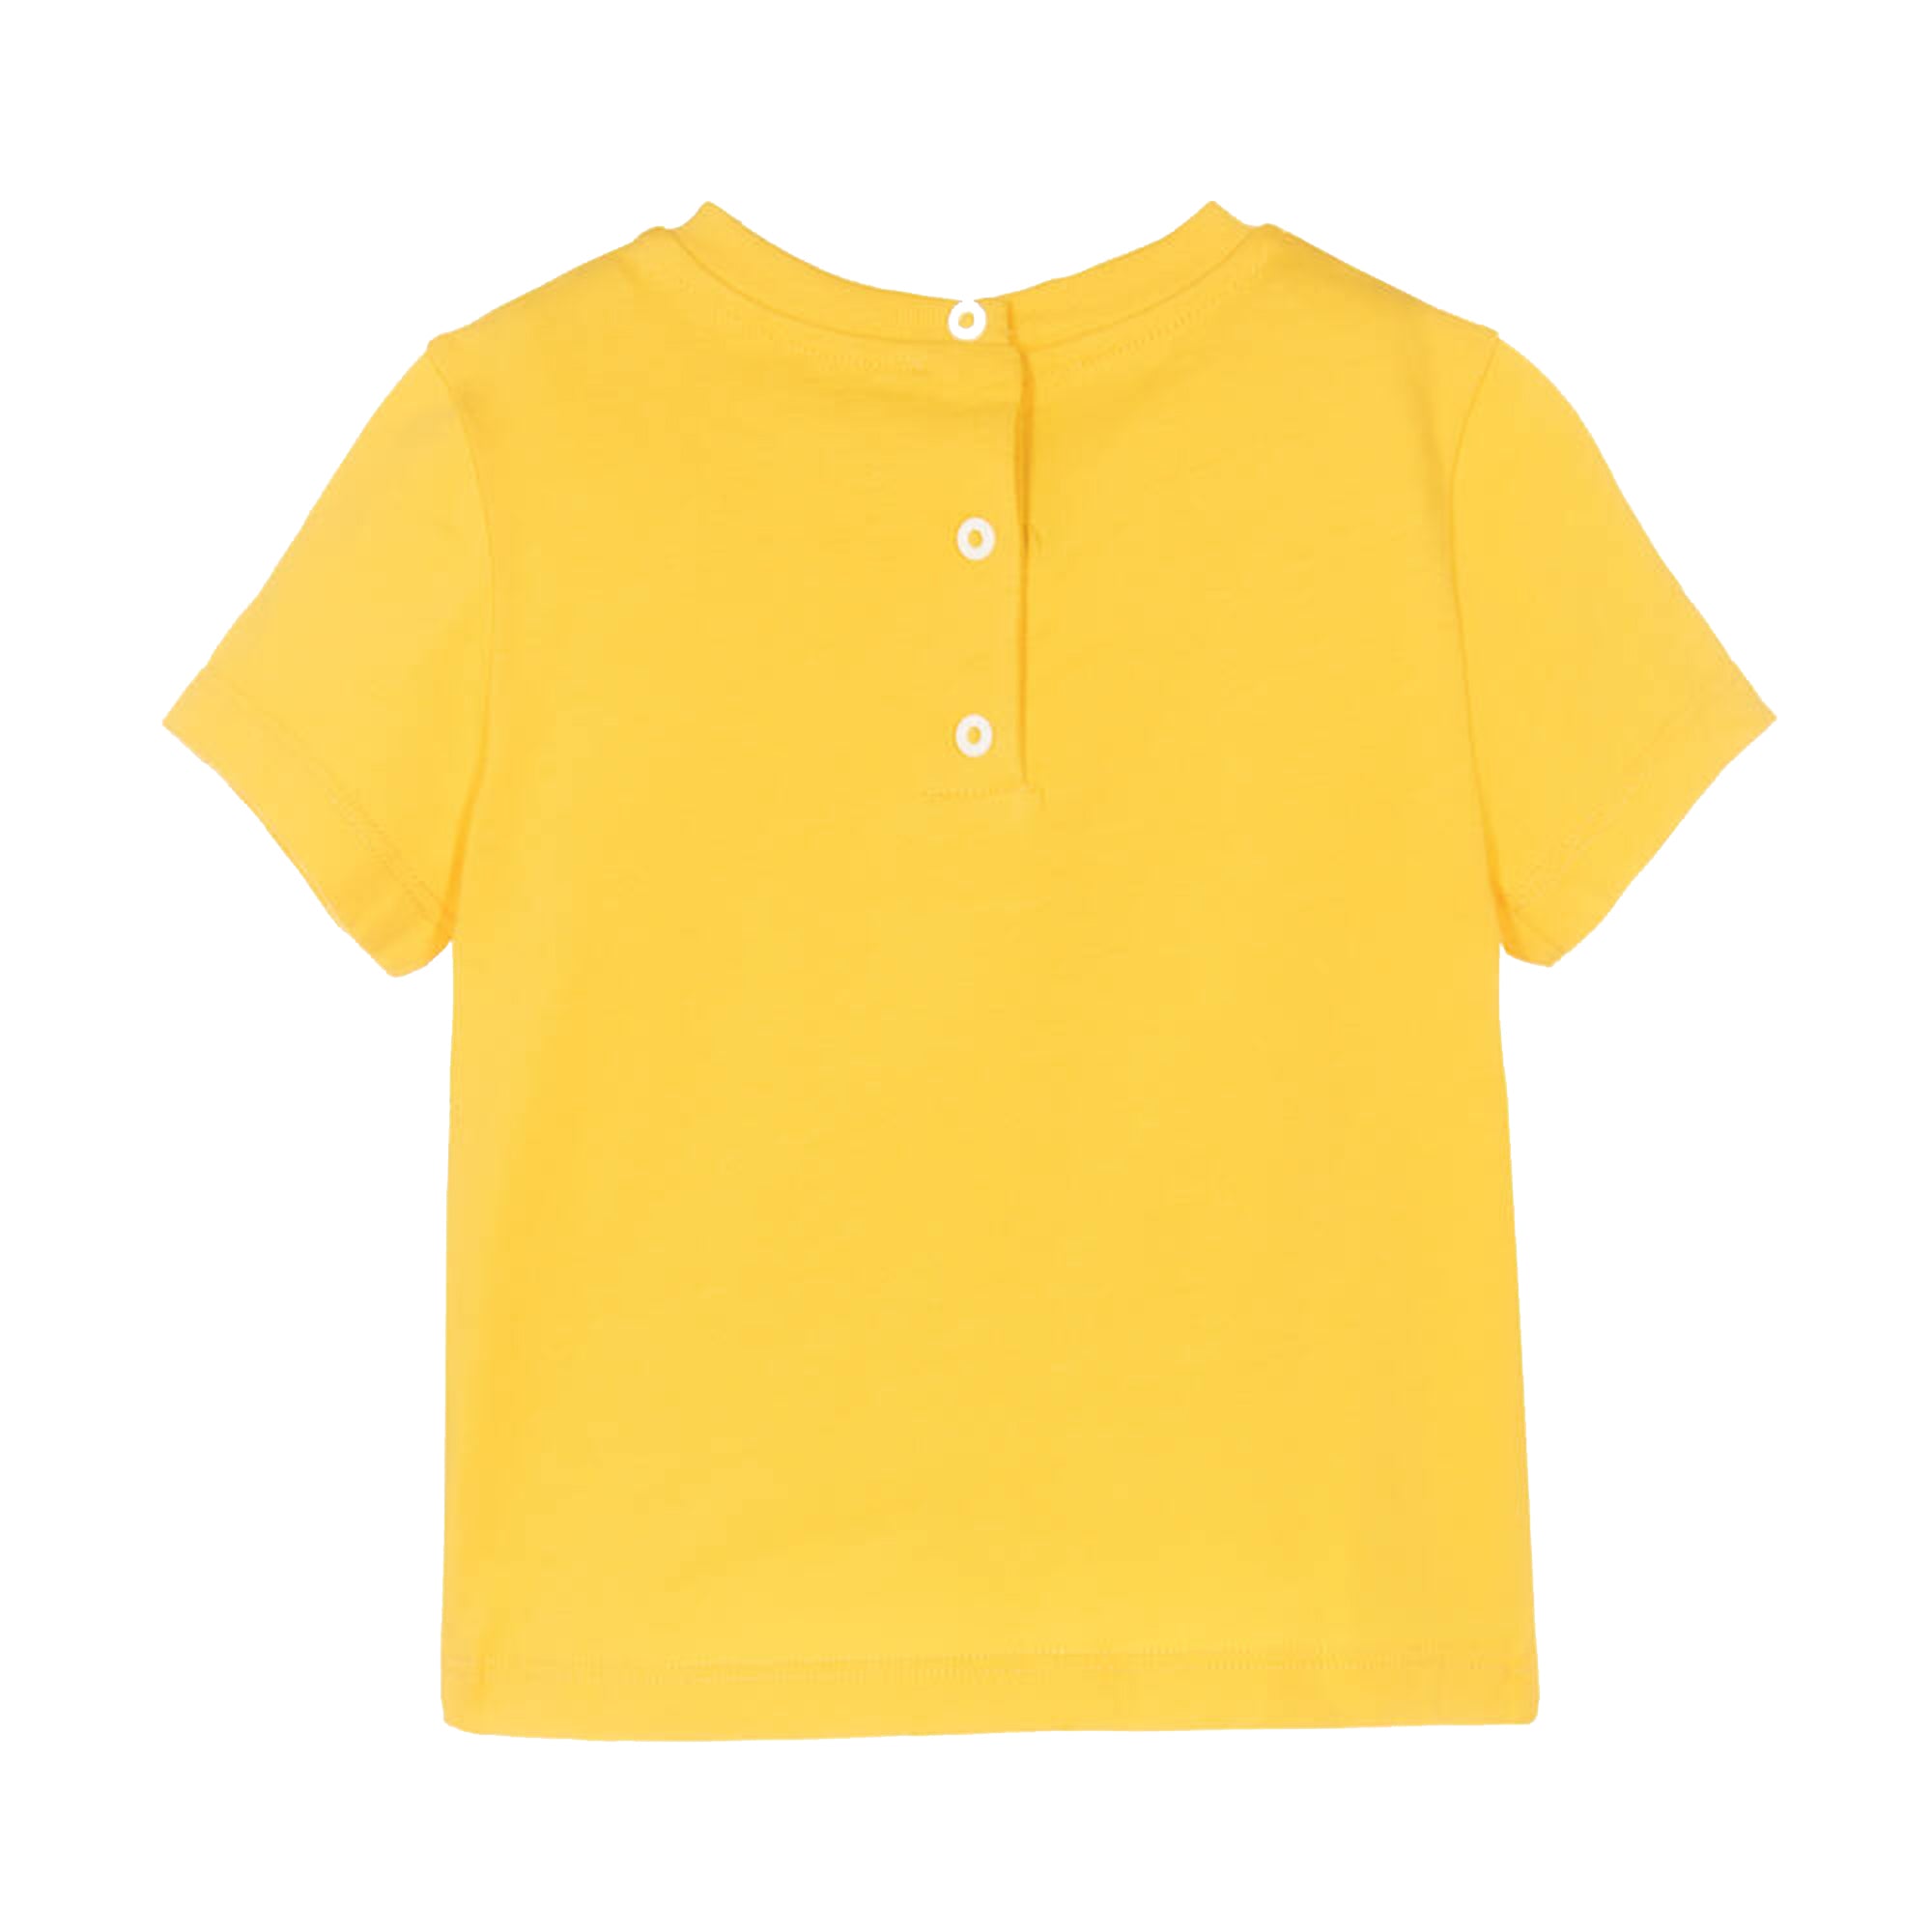 Fendi Baby Boys Logo T-shirt Yellow 18M